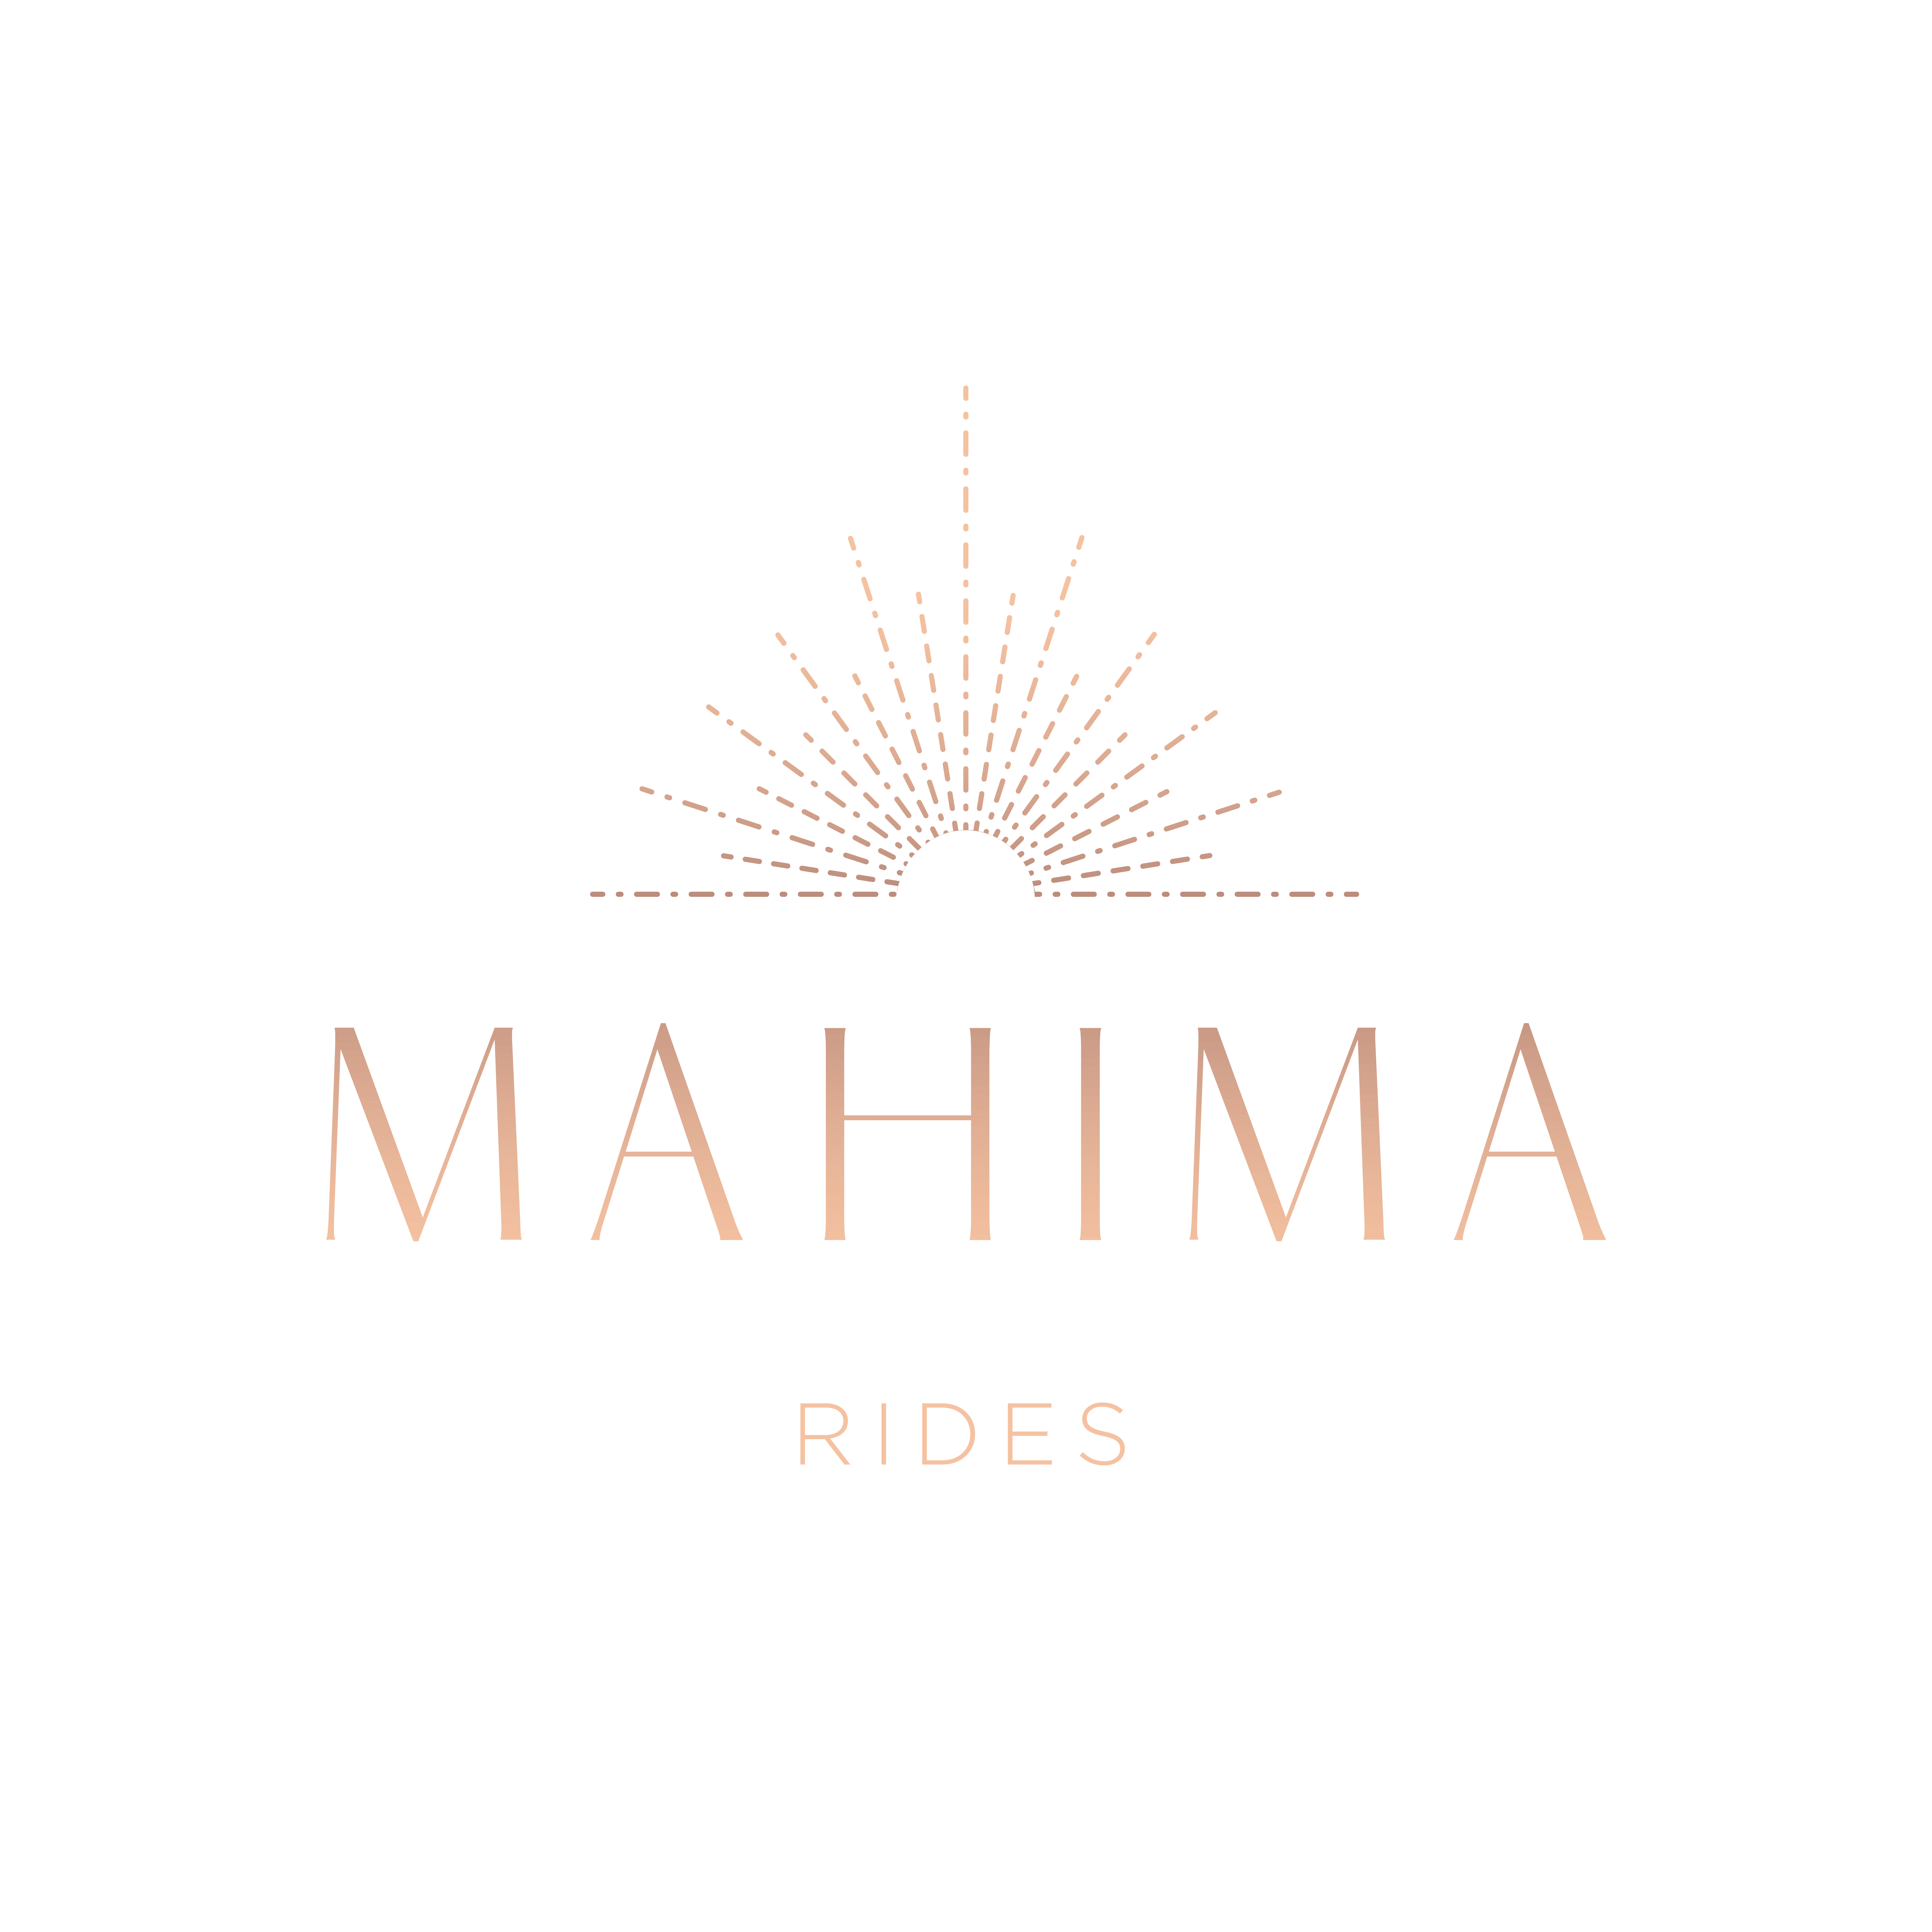 Mahima Rides